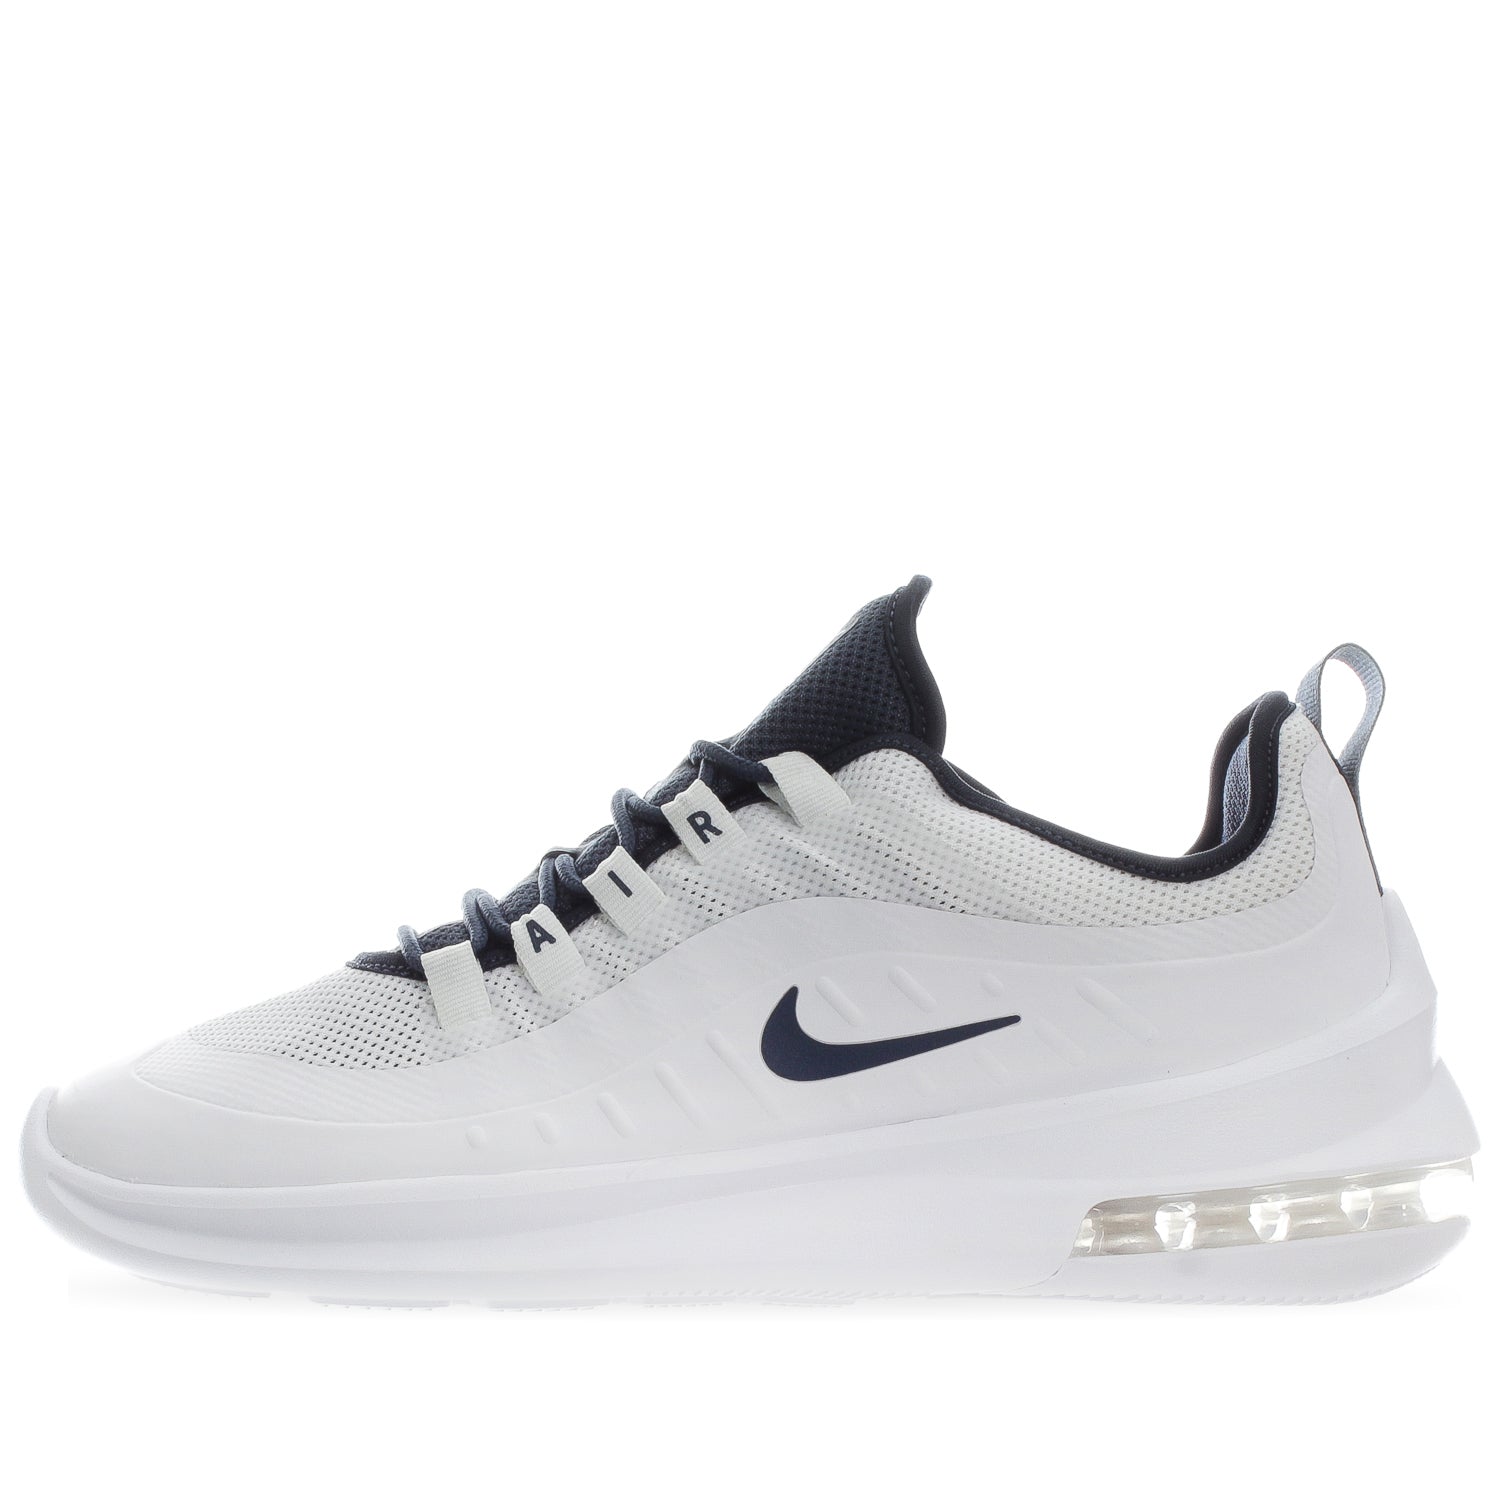 Tenis Nike Max Axis - AA2146105 - Blanco - Hombre | Shoelander.com - Footwear Retail